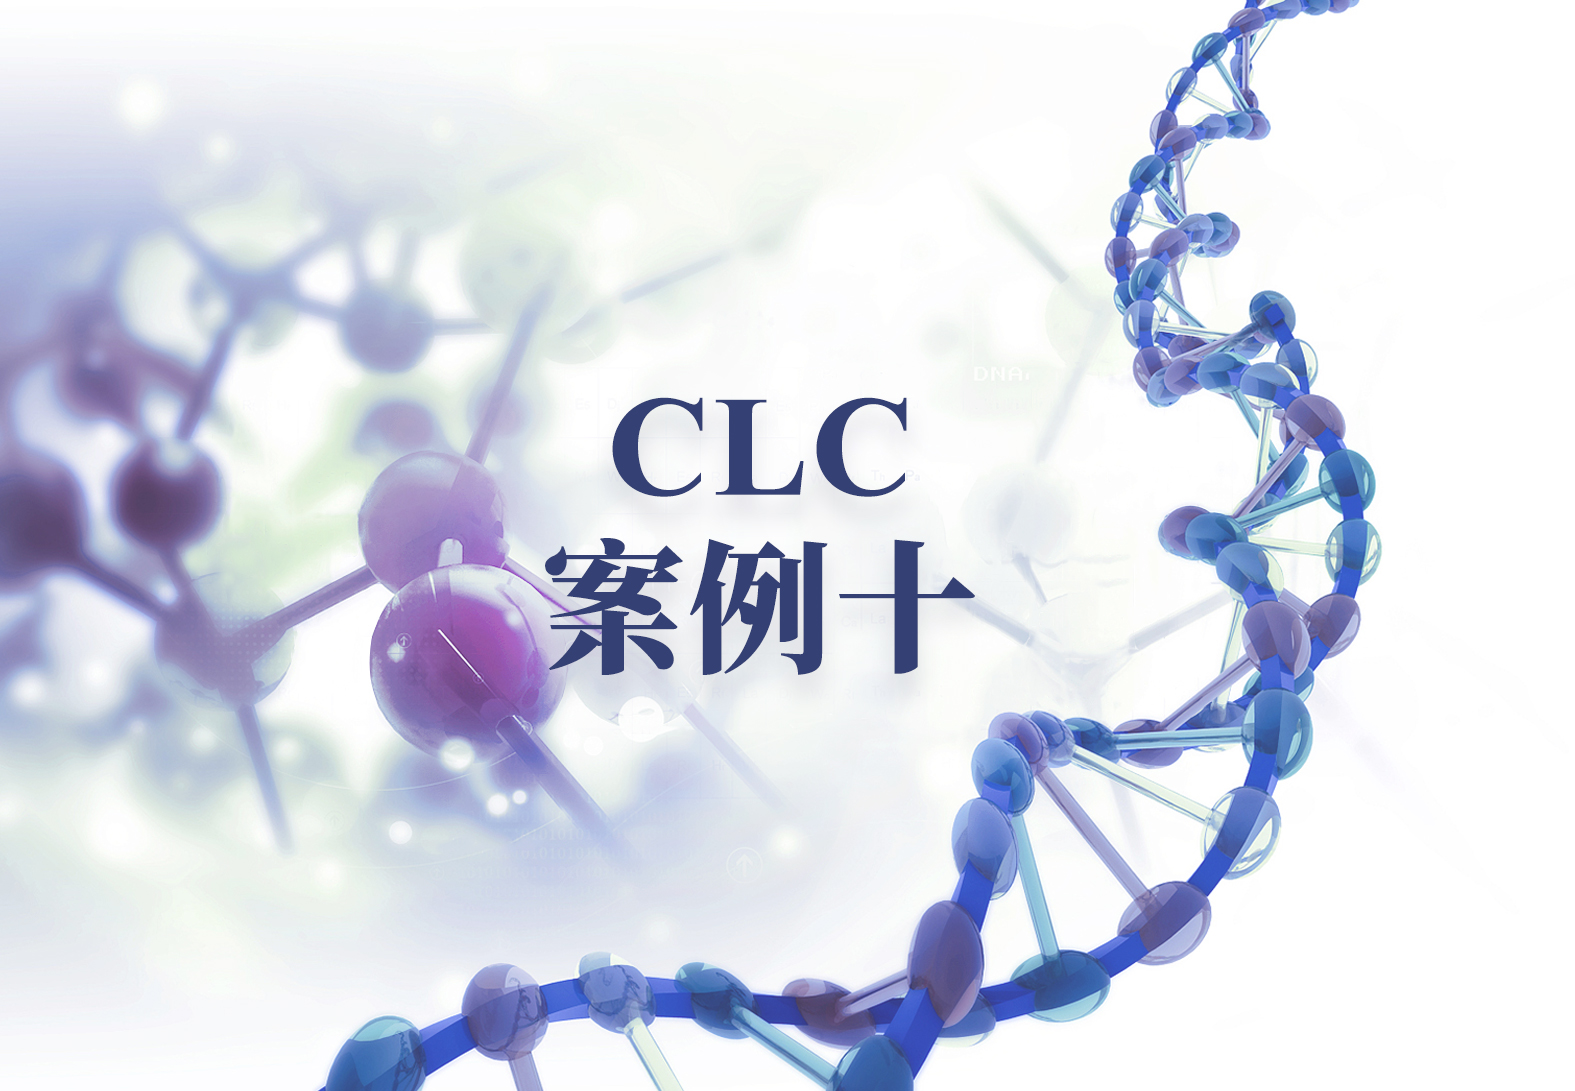 CLC案例十——CLC助力新冠研究——免疫与疫苗